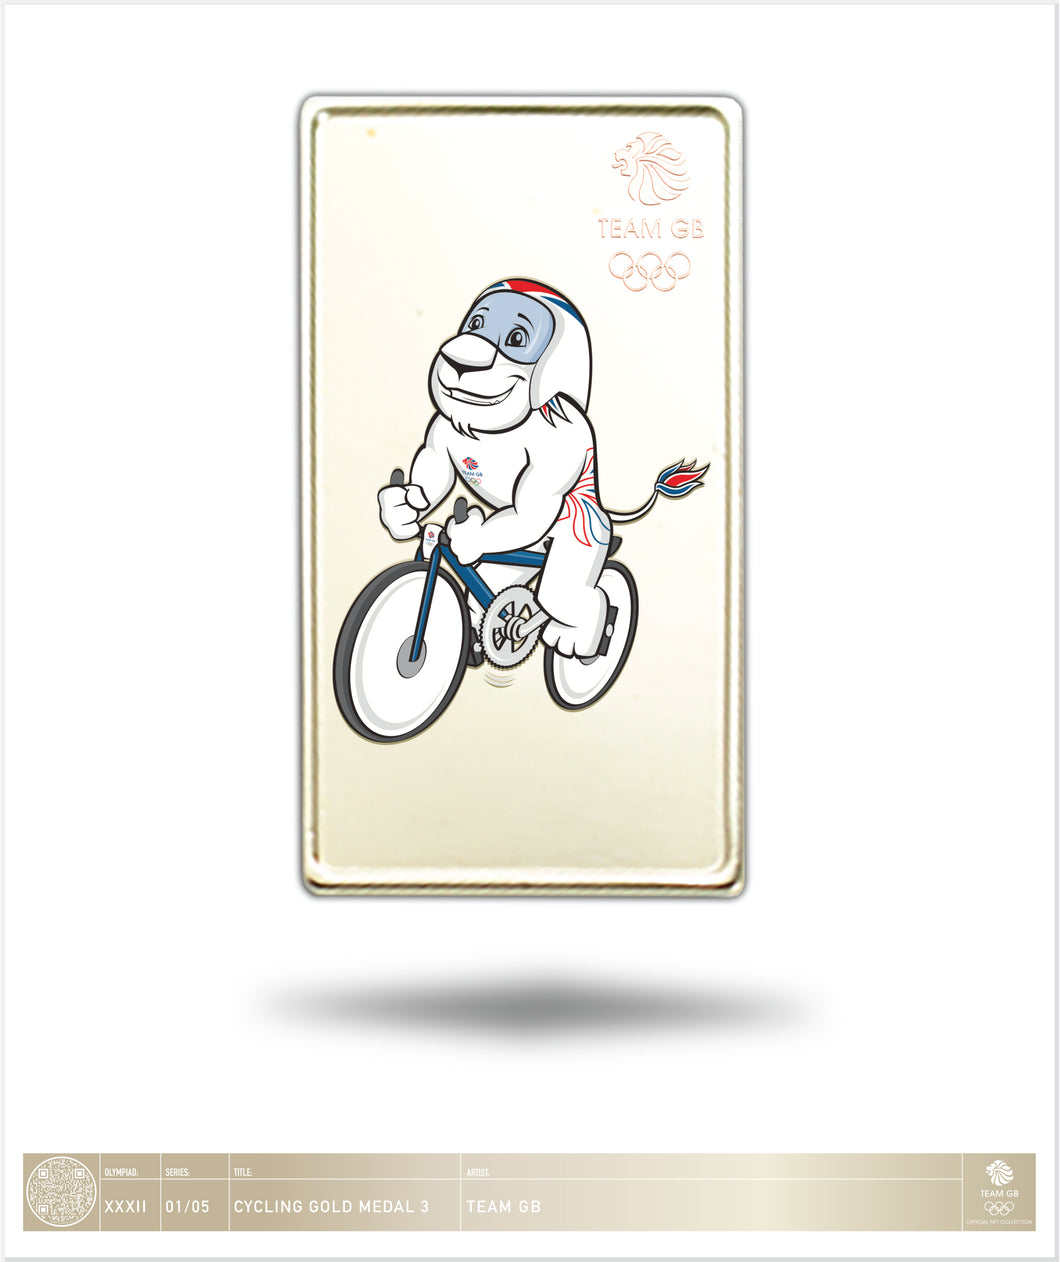 Golden Medal Moment - Charlotte Worthington - Tokyo - BMX FREESTYLE - 01 August 2021 - 1/5